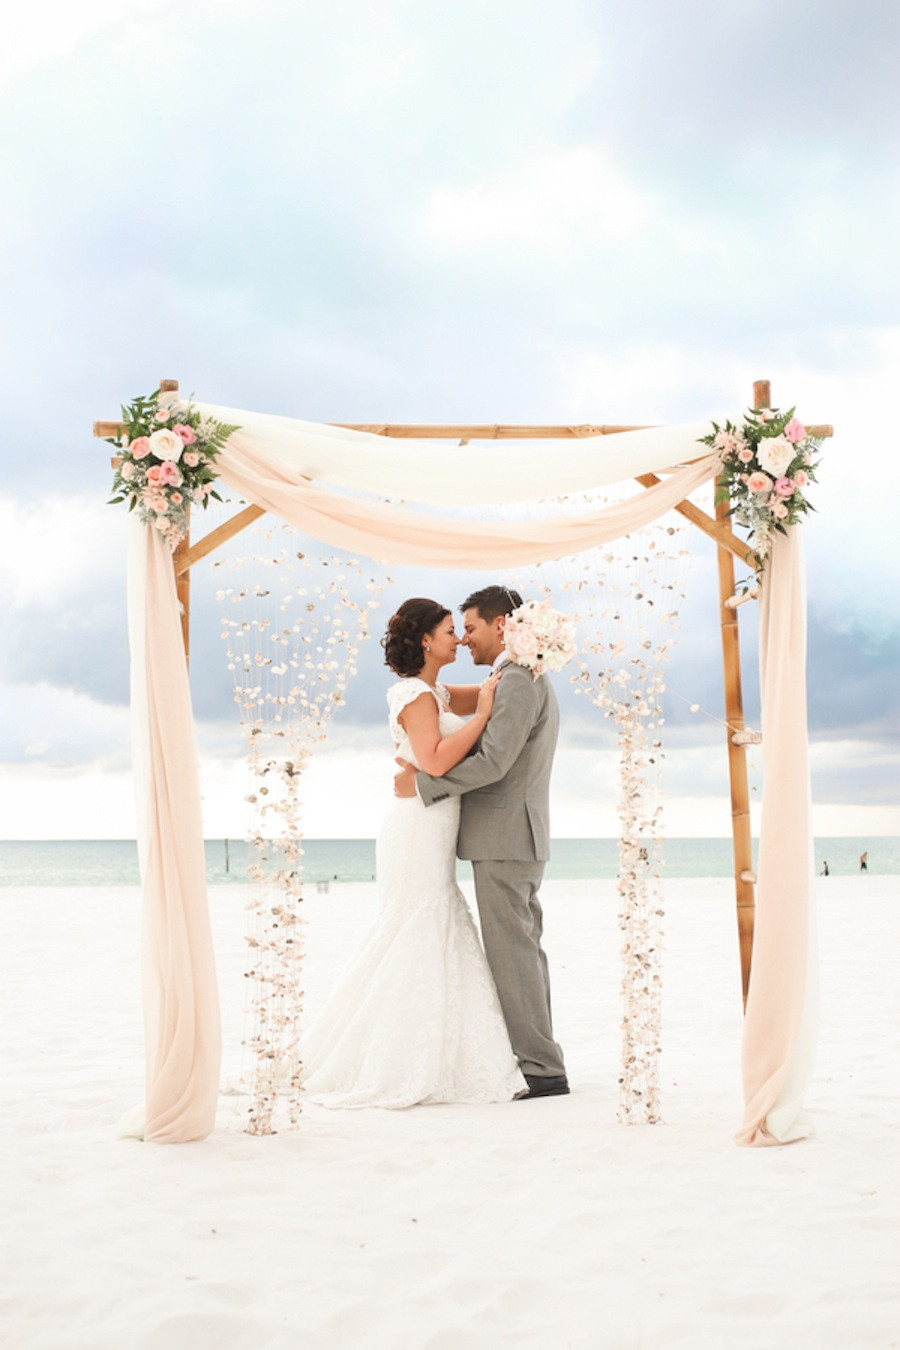 Beach Wedding Ceremony Ideas
 19 Charming Beach and Coastal Wedding Arch Ideas for 2018